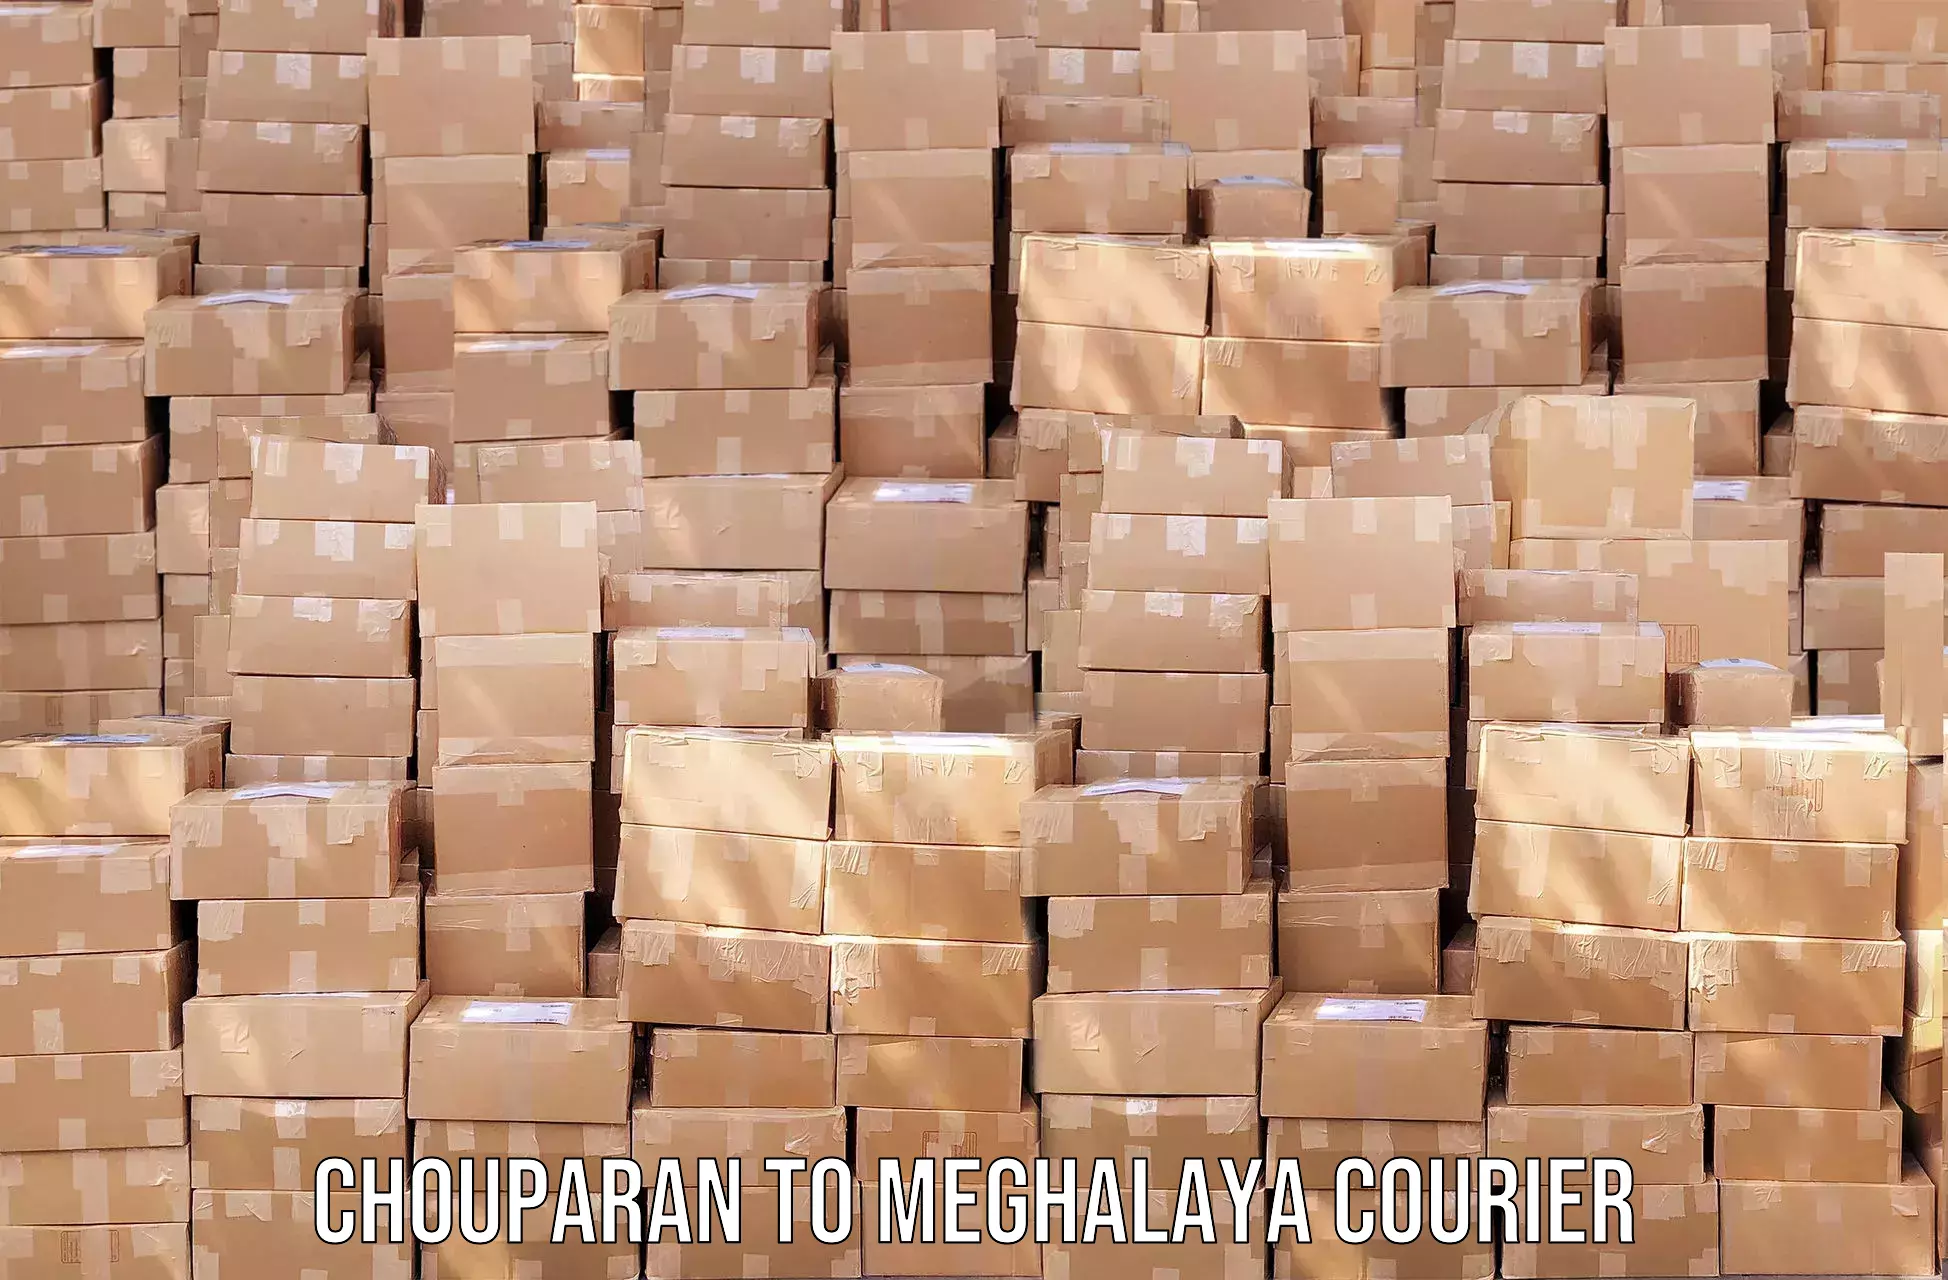 Courier app Chouparan to Meghalaya